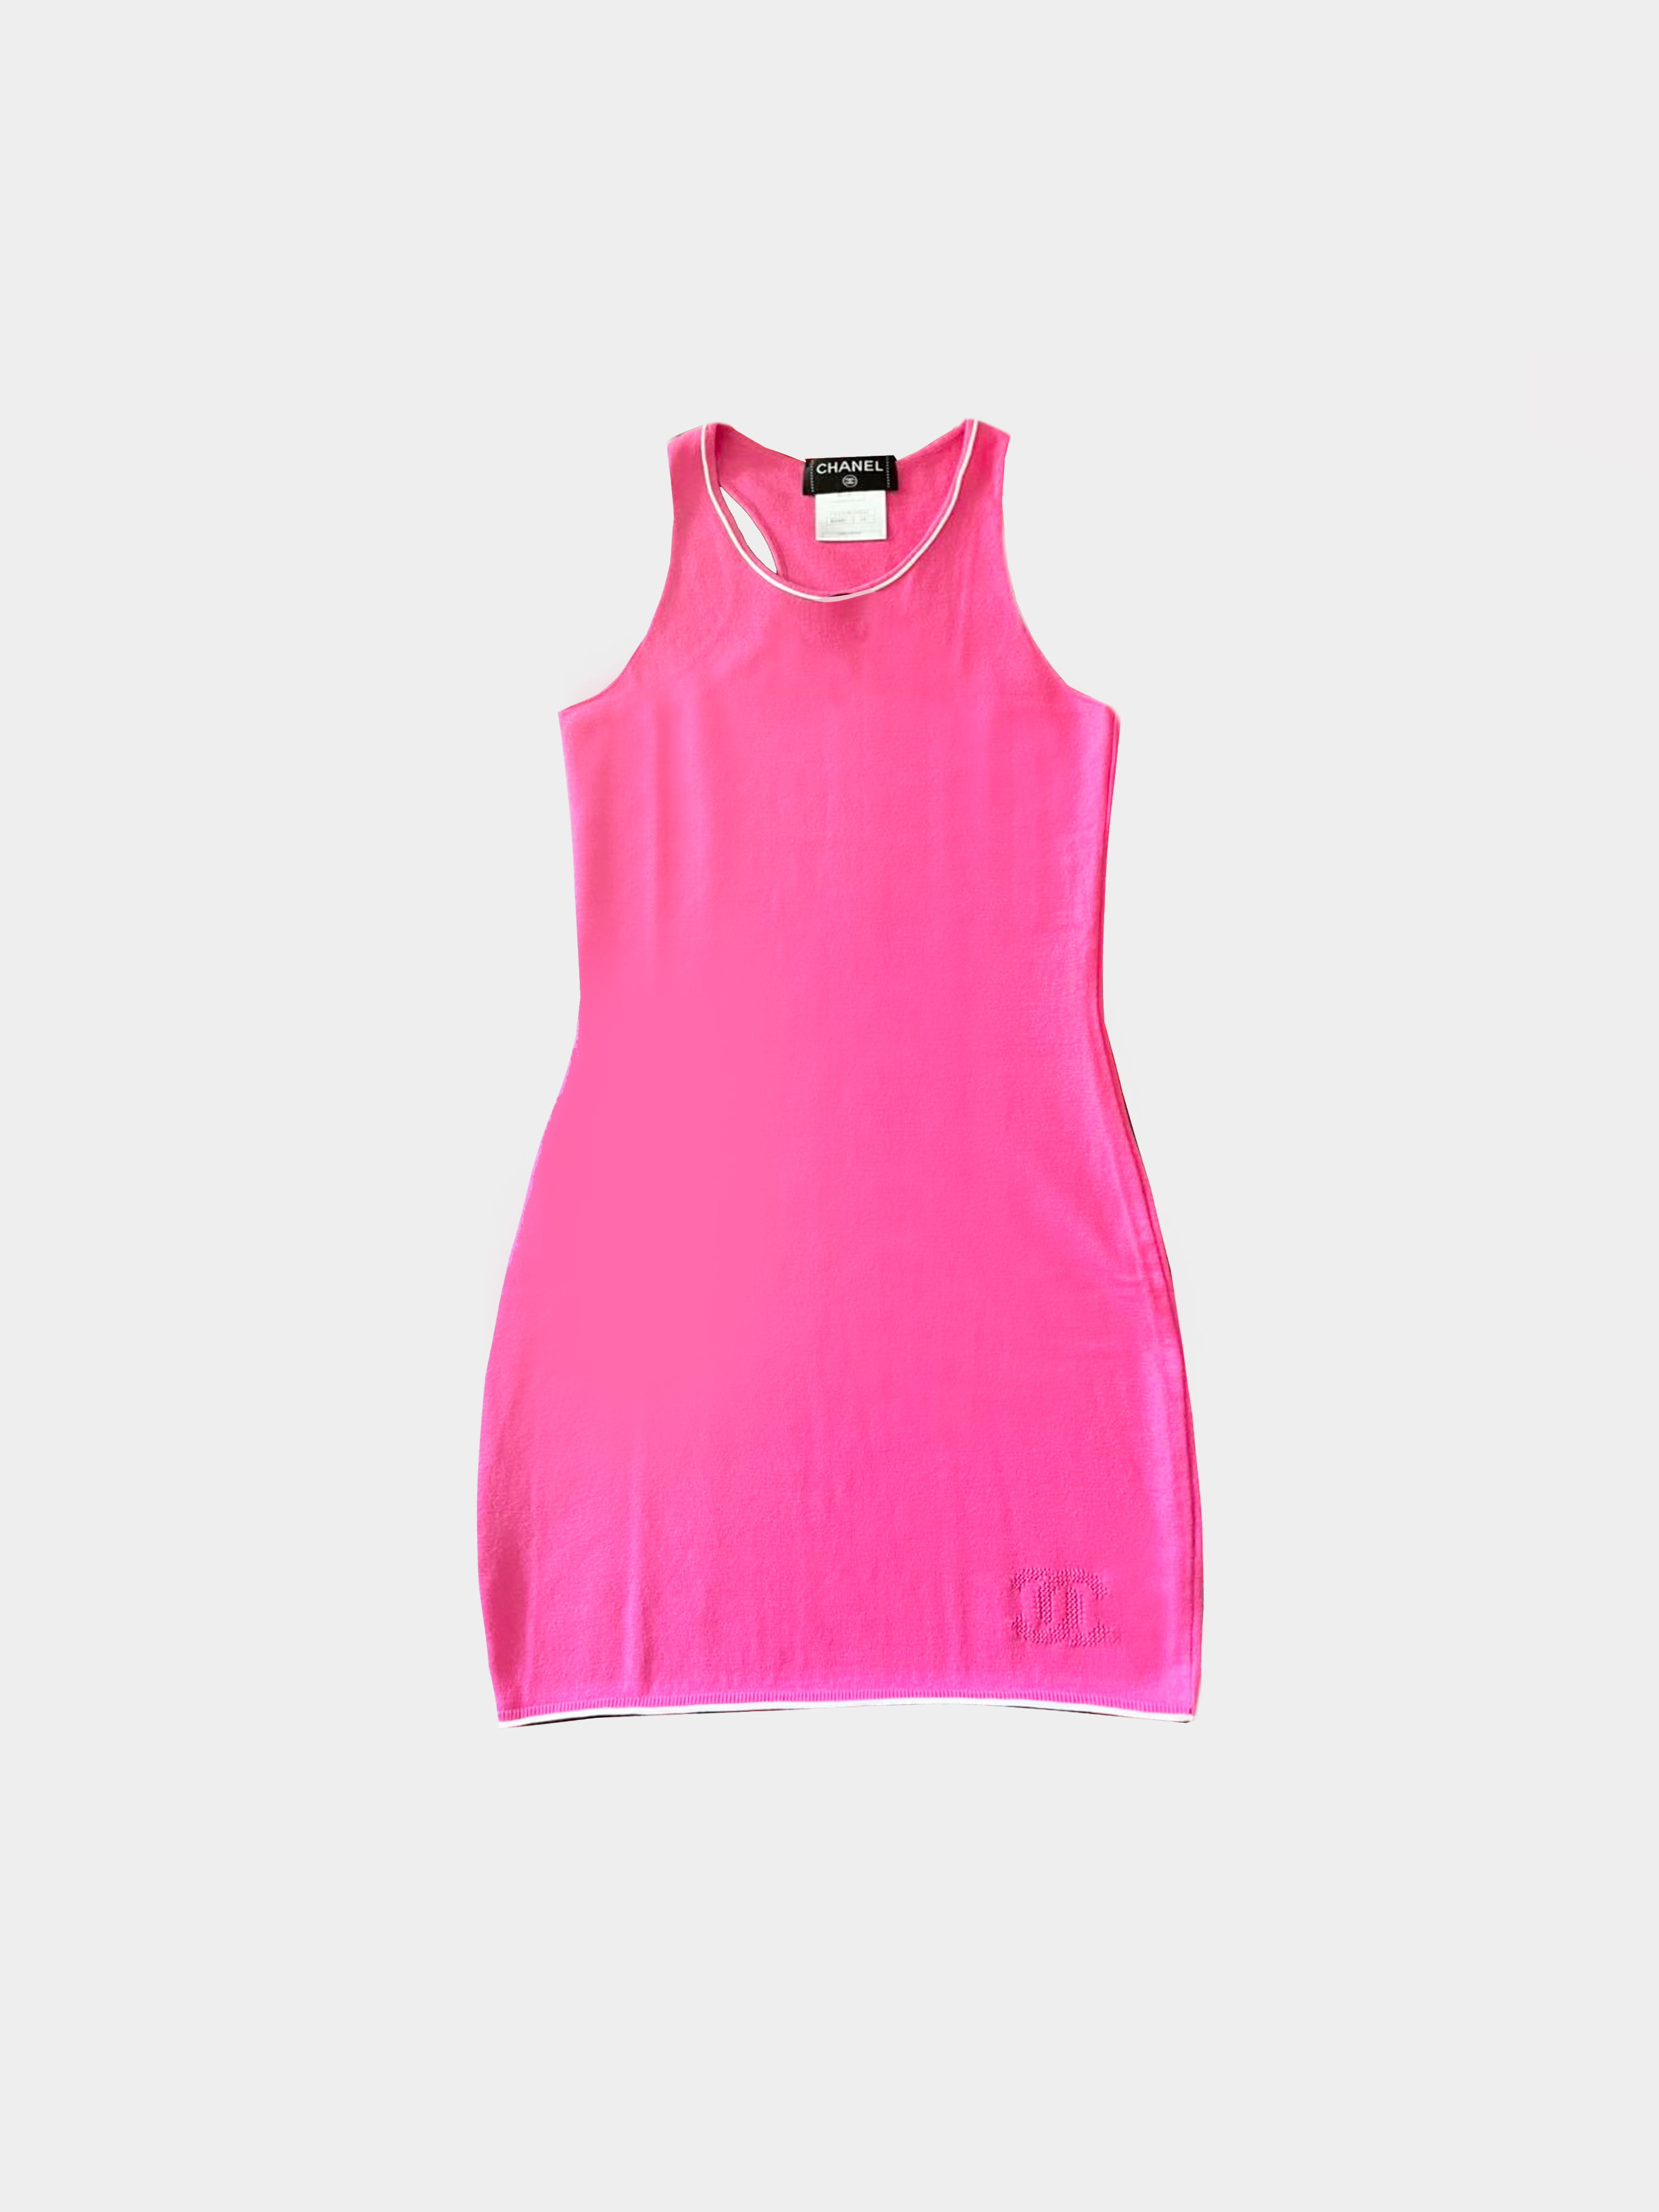 Chanel 2000s Pink Knit Tank Dress